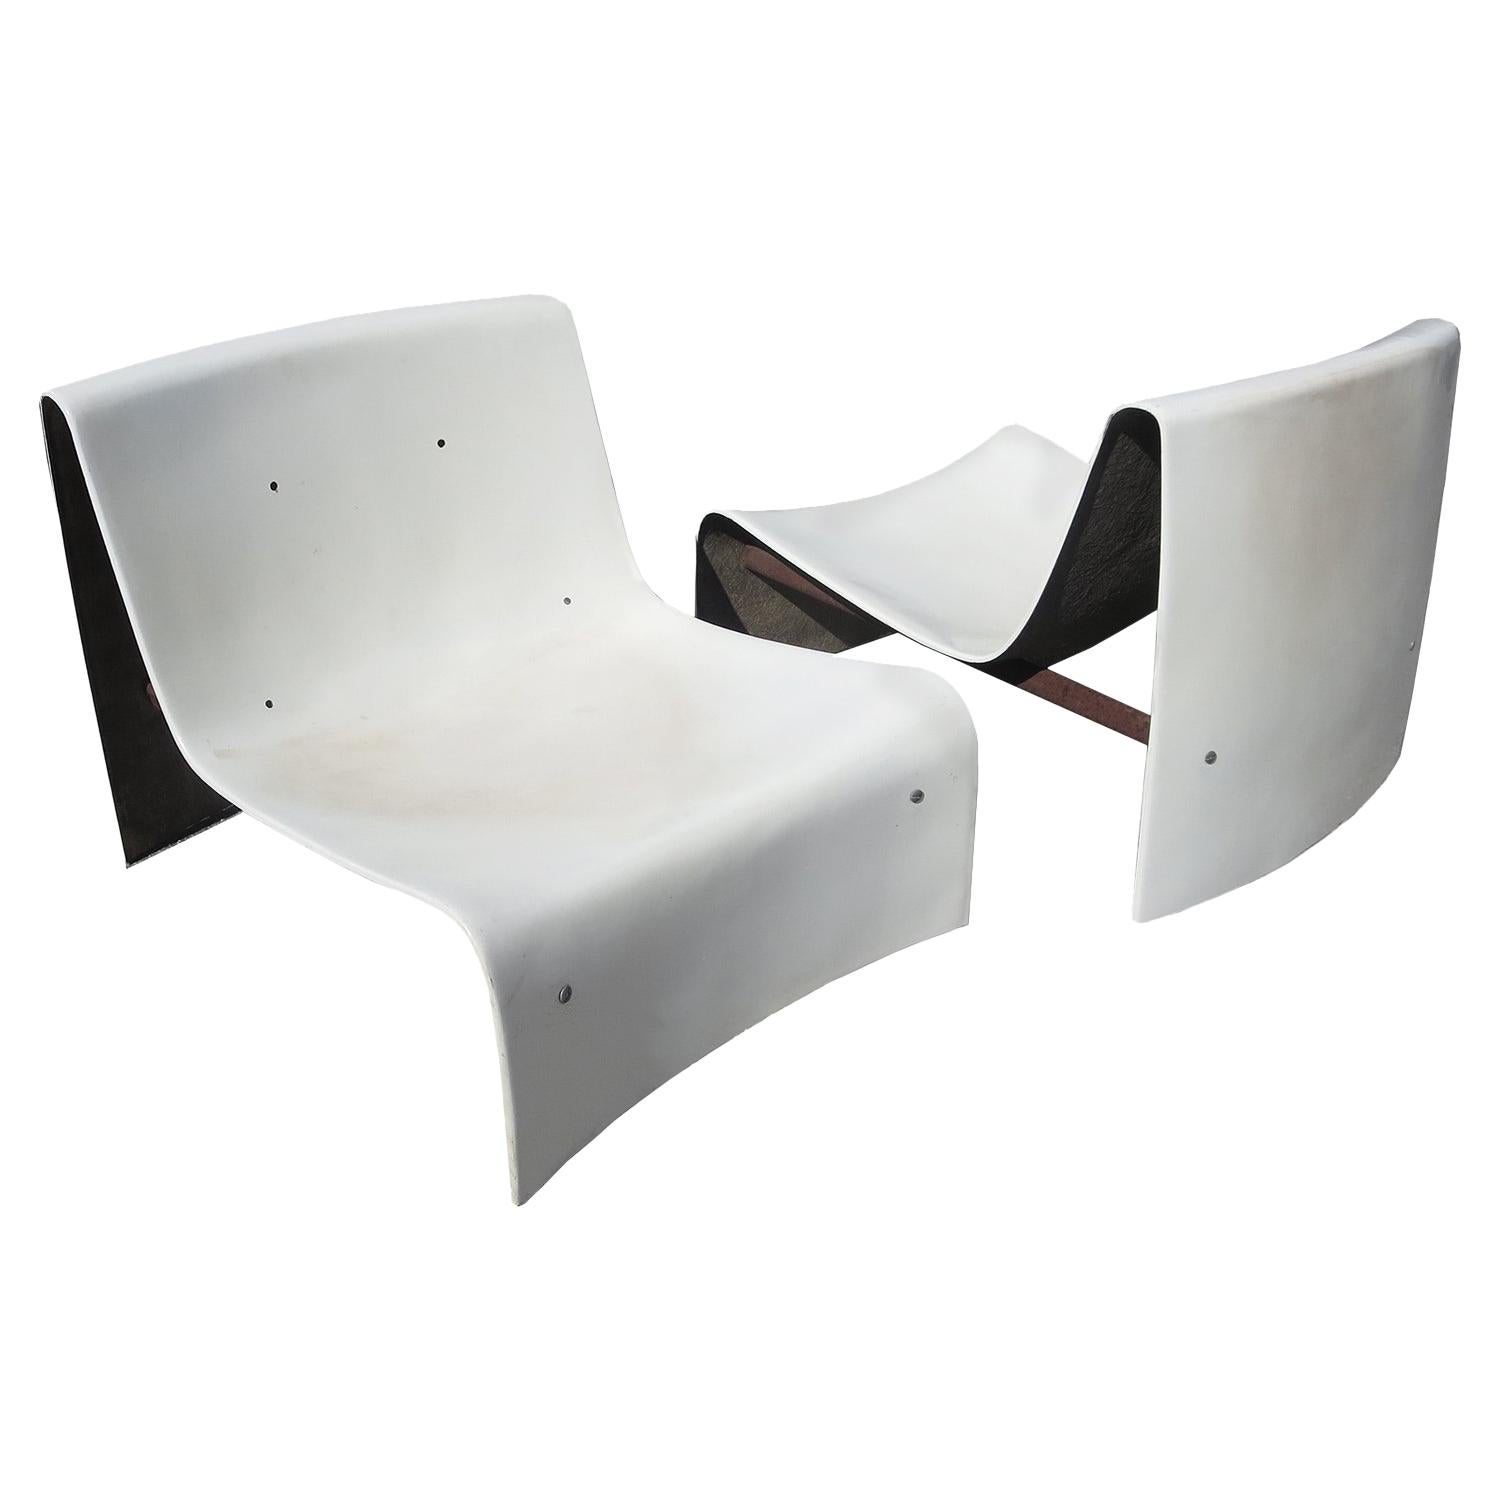 Midcentury Italian Fiberglass Chairs for Poolside or Patio